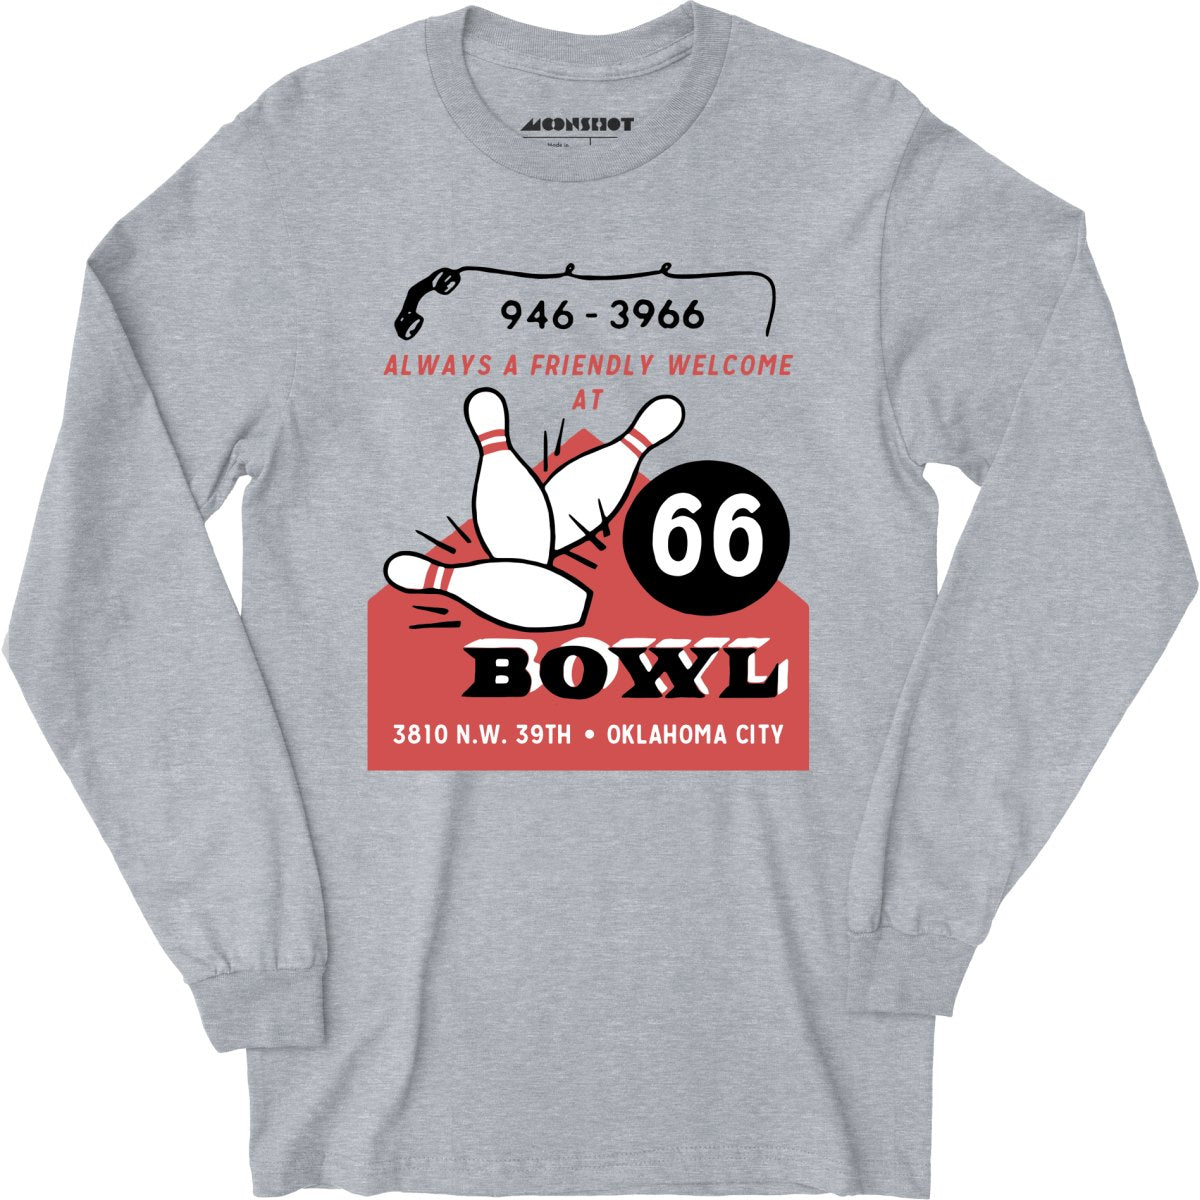 66 Bowl - Oklahoma City, OK - Vintage Bowling Alley - Long Sleeve T-Shirt